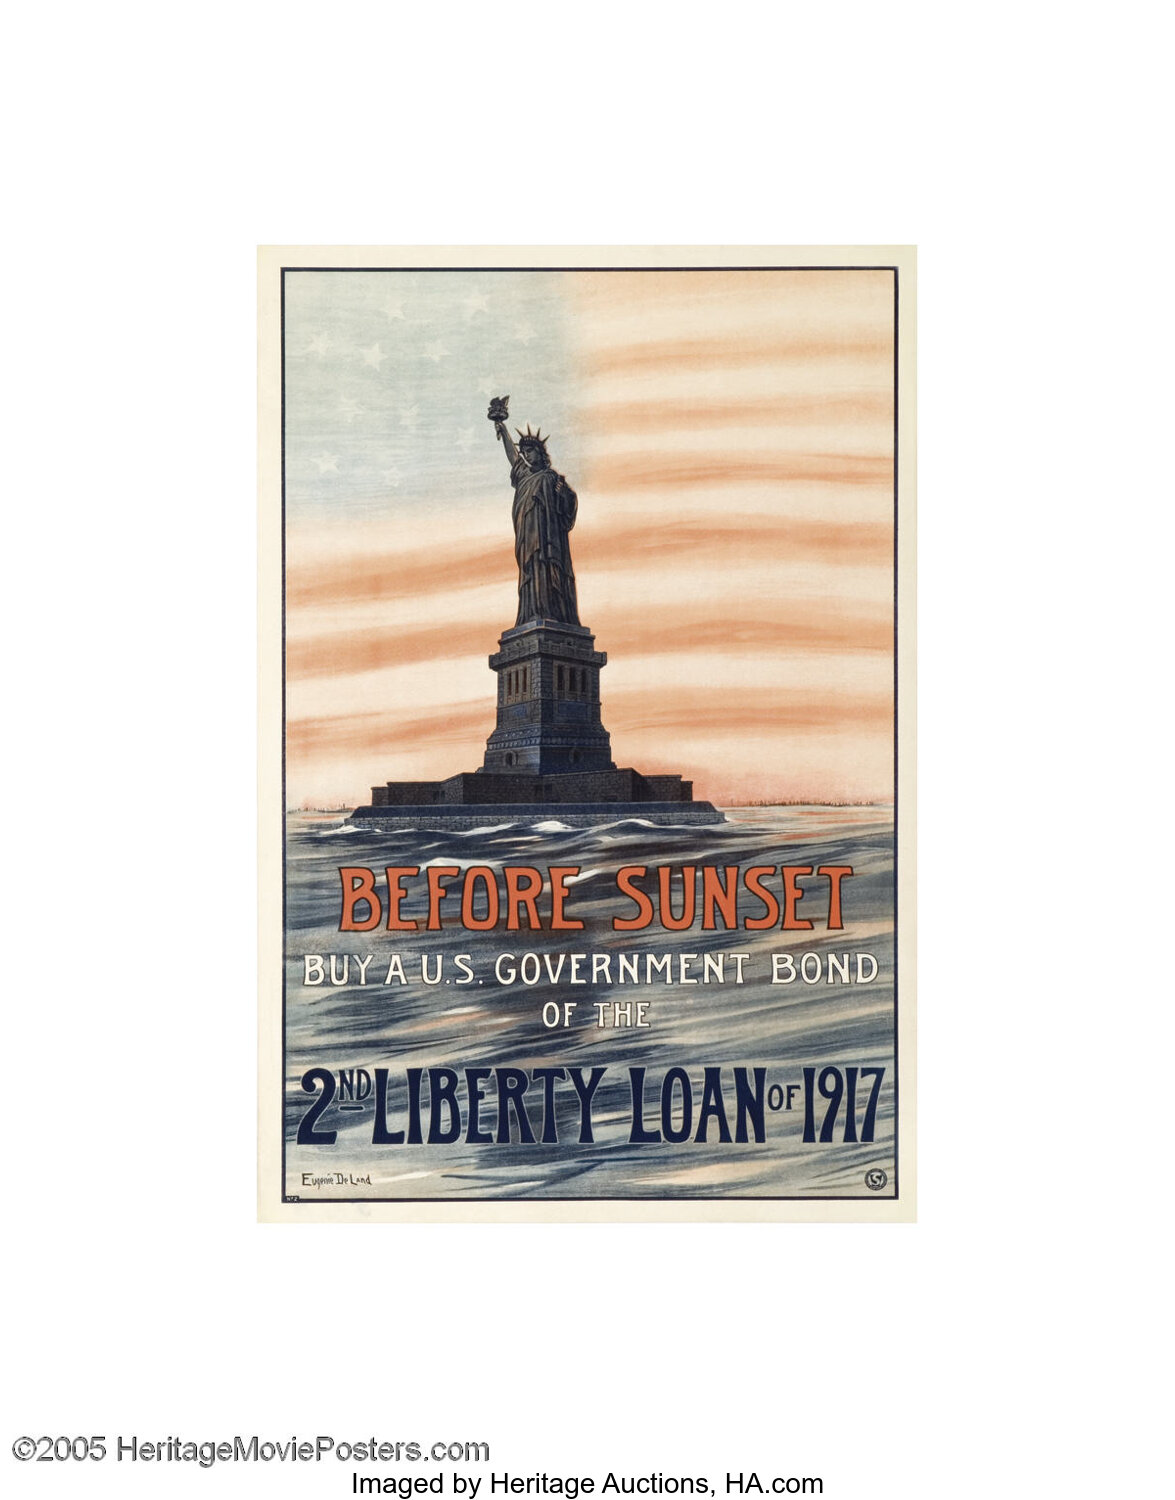 Before Sunset Sackett Wilhelms Corp Ny 1917 Vintage Lot 28115 Heritage Auctions